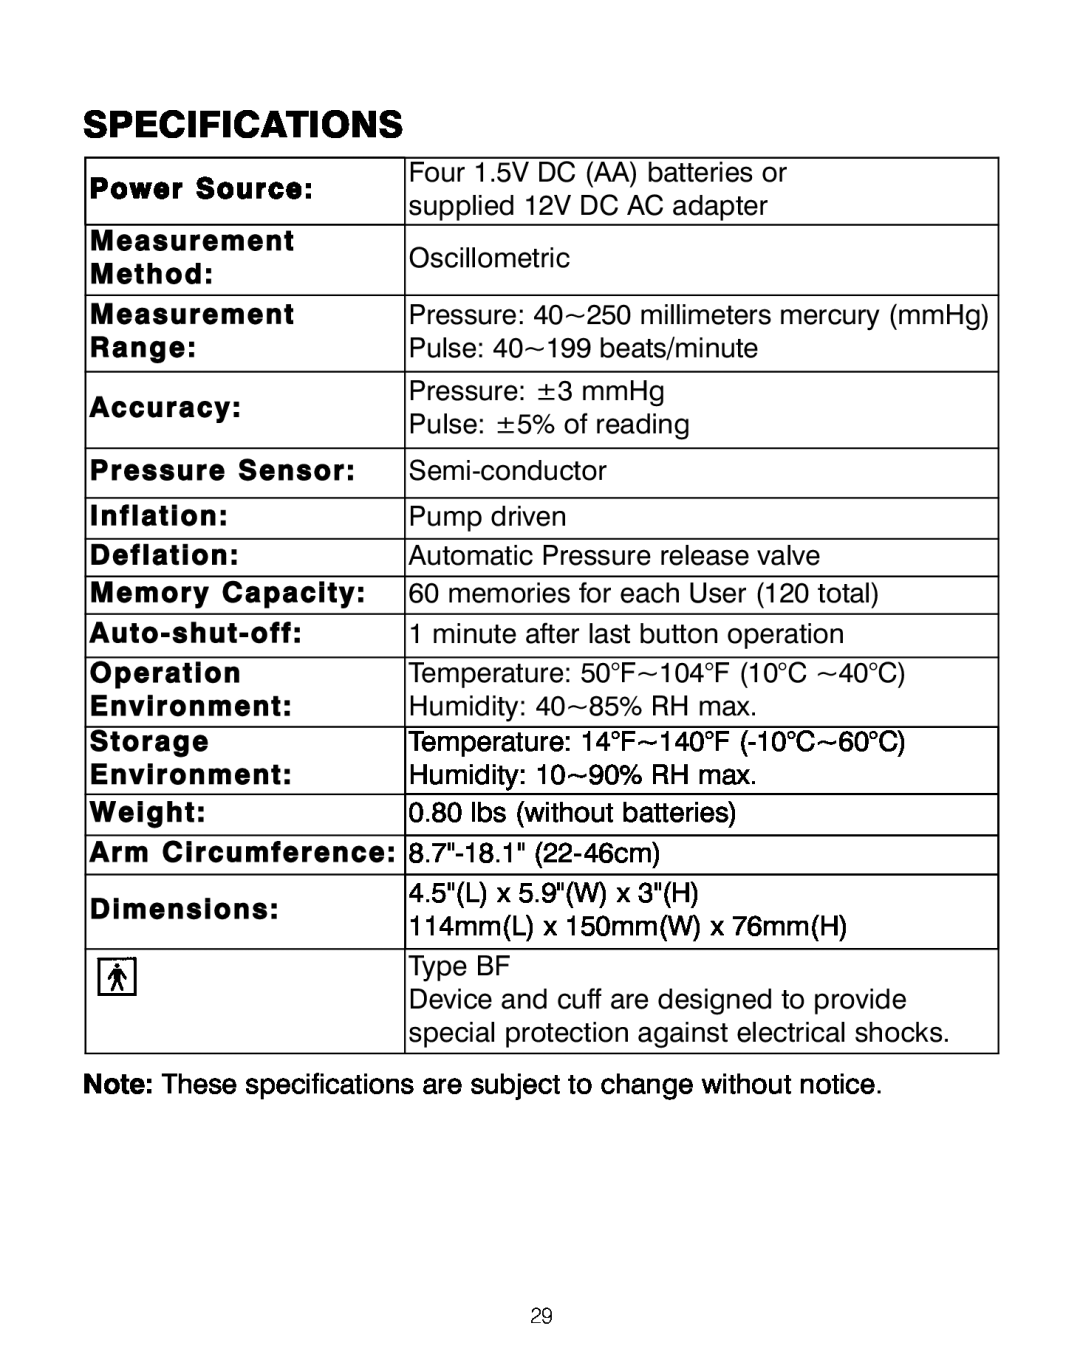 HoMedics BPA-200 manual Specifications 